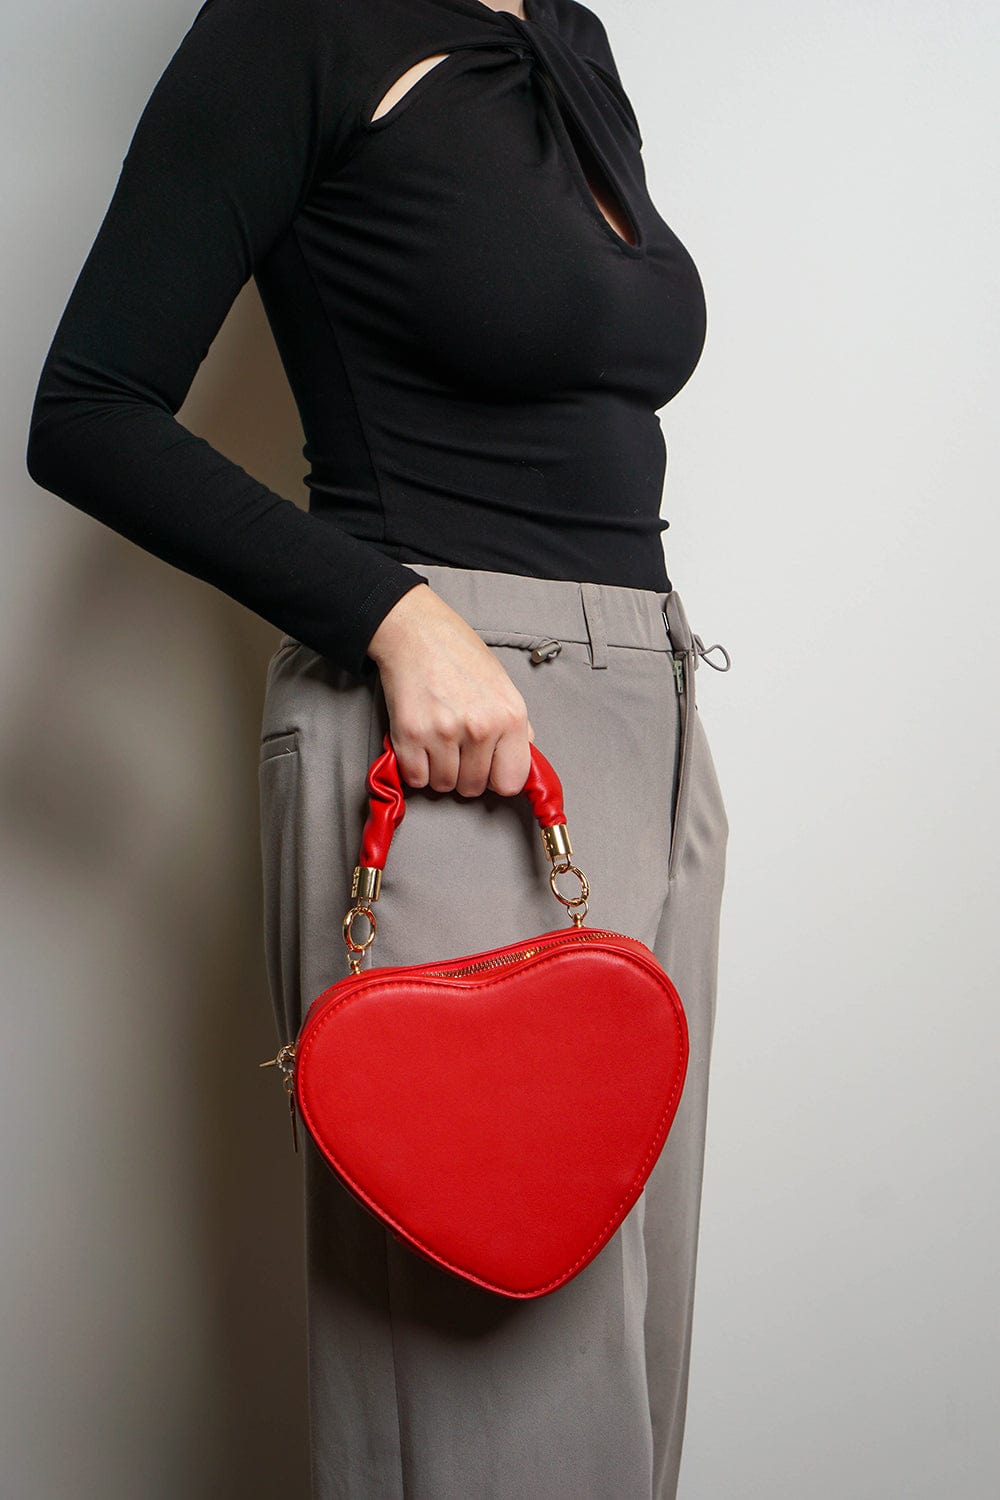 Heart Shaped Shoulder Bag, Heart Shape Crossbody Bag